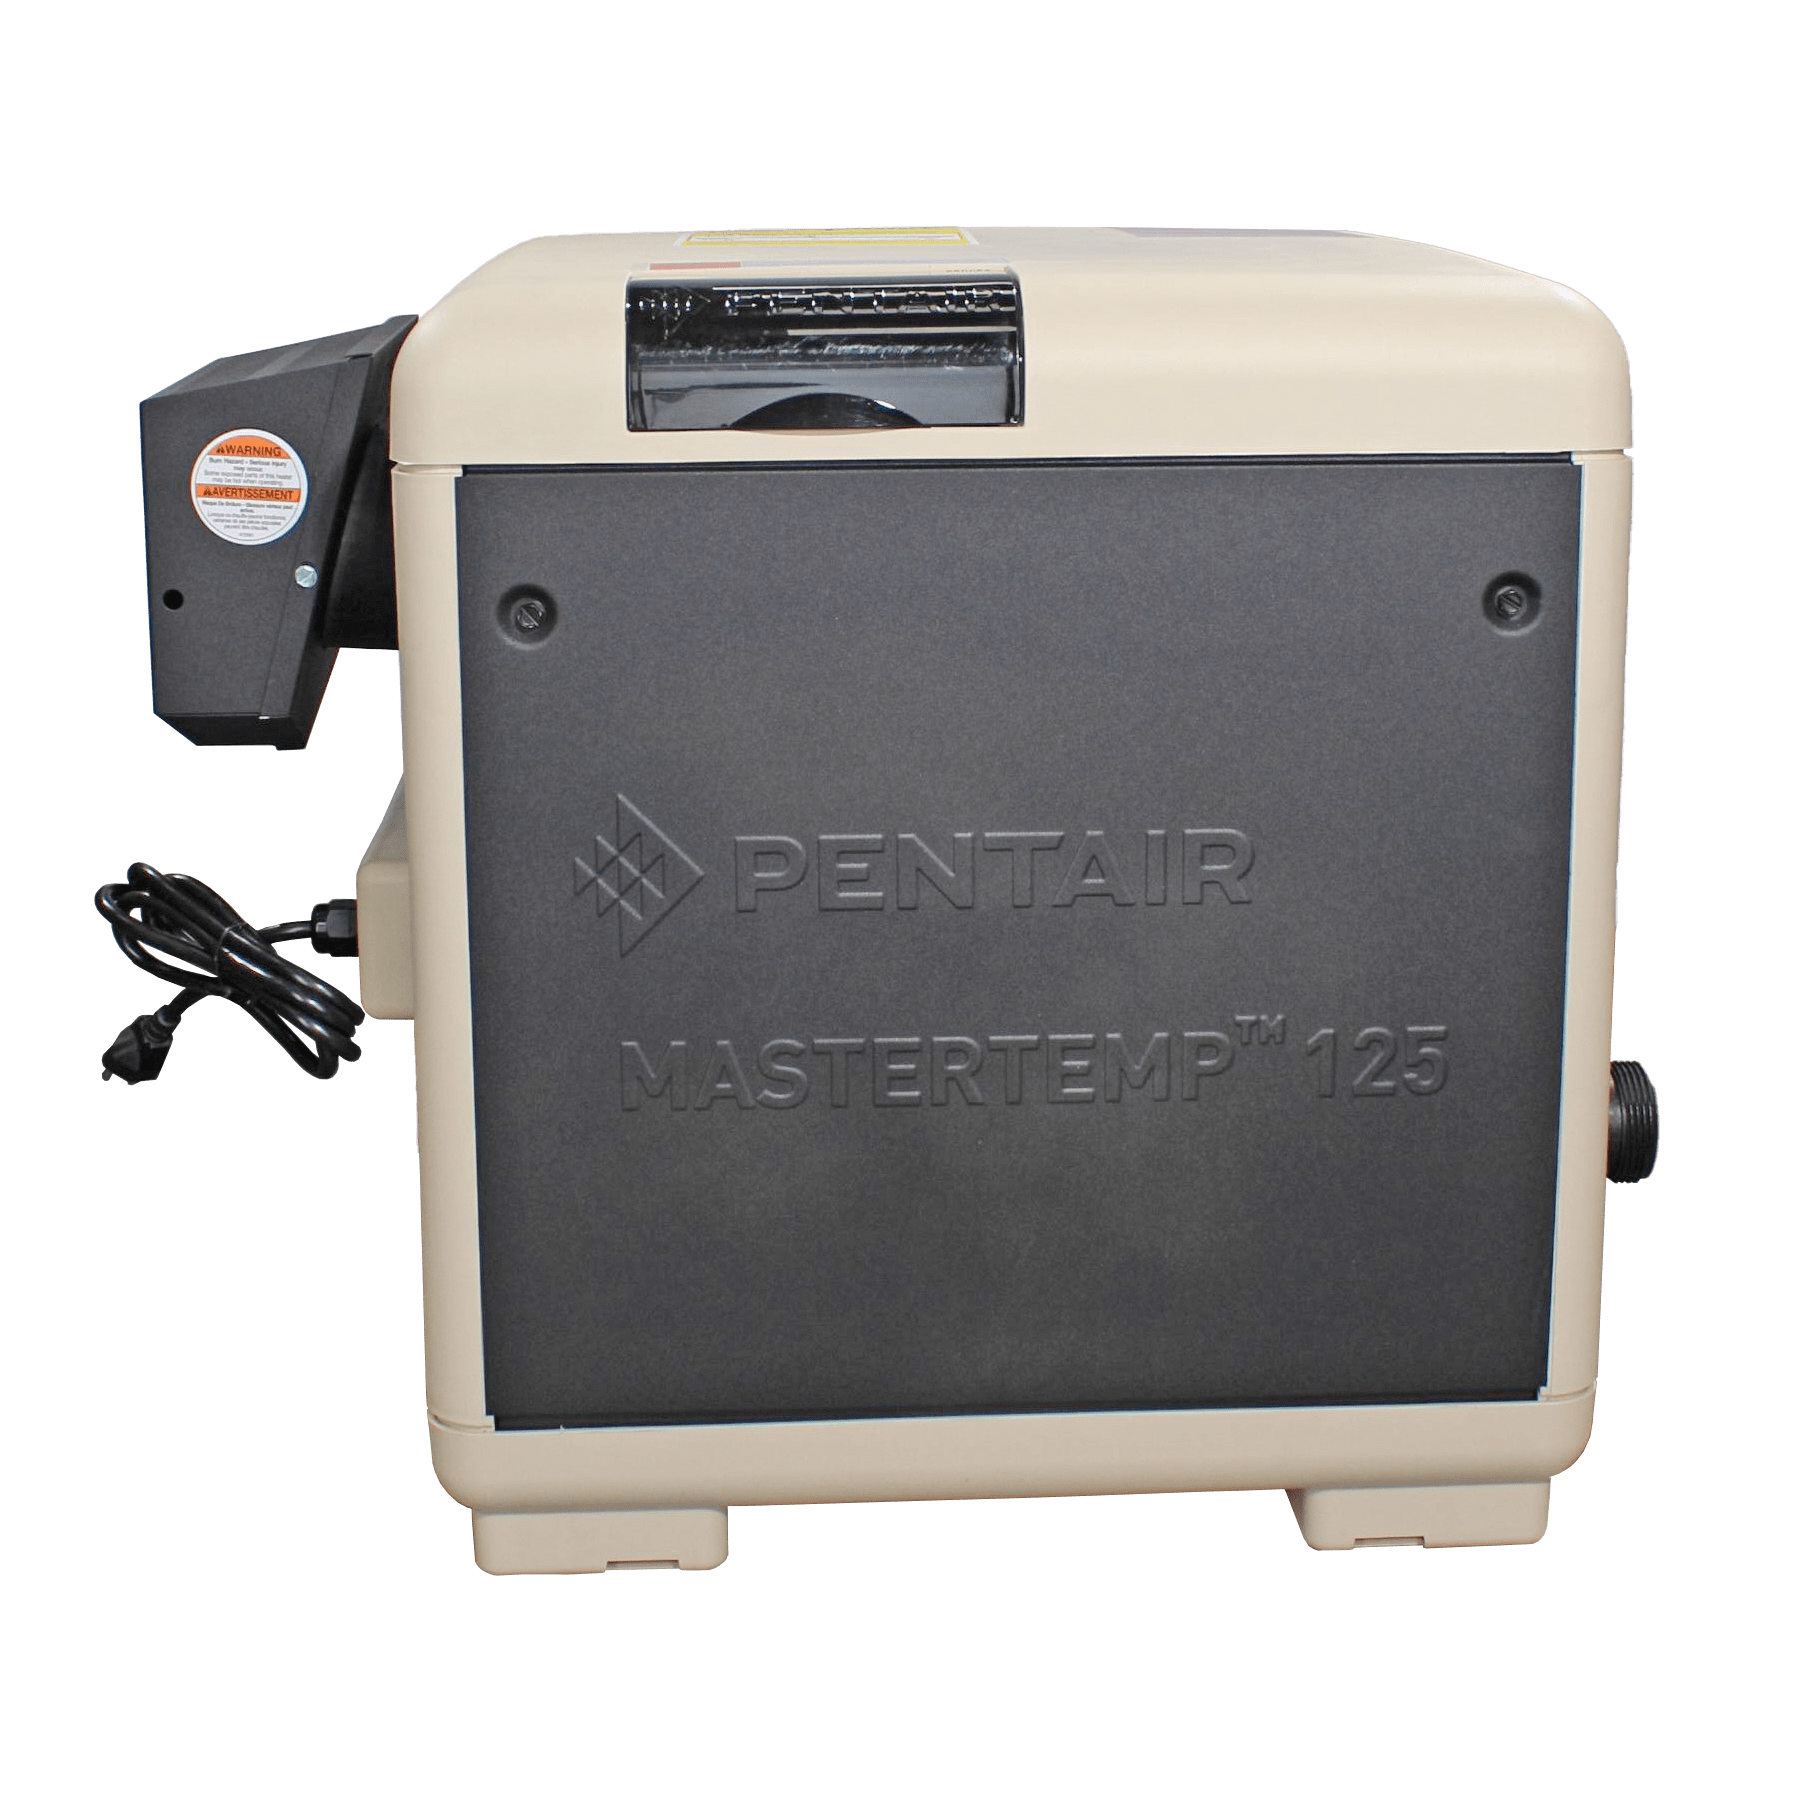 Pentair EC-462024 MasterTemp 125k BTU Above Ground Pool Heater w/ Cord - Natural Gas